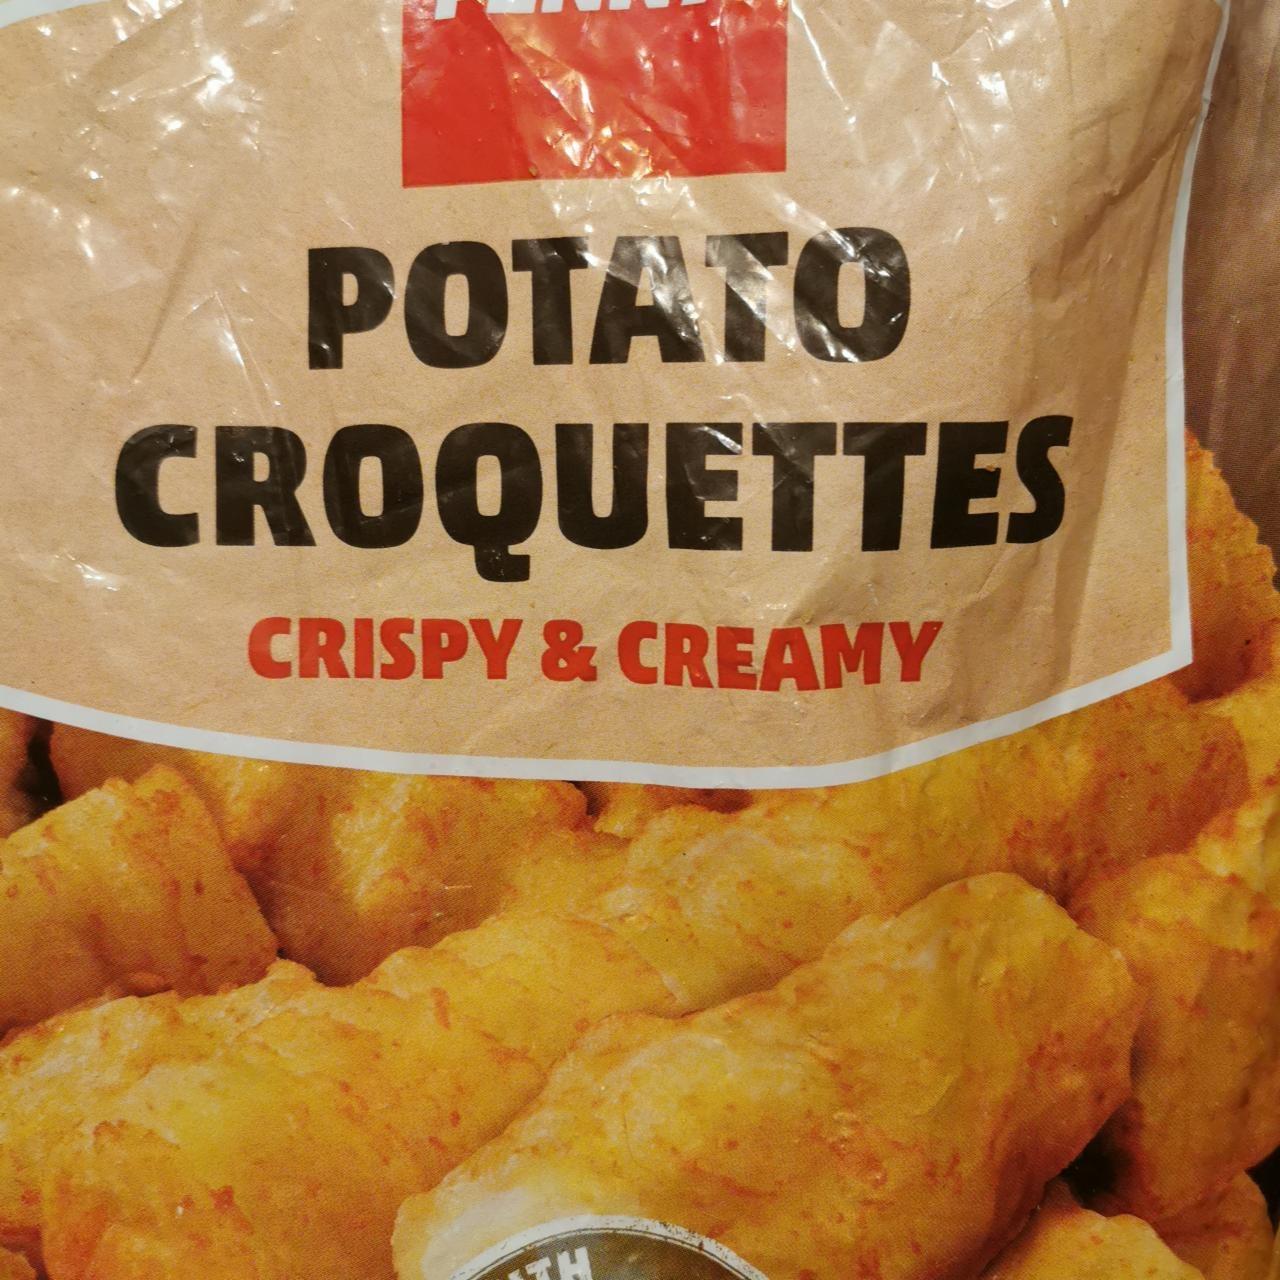 Képek - Potato croquettes Crispy & creamy Penny